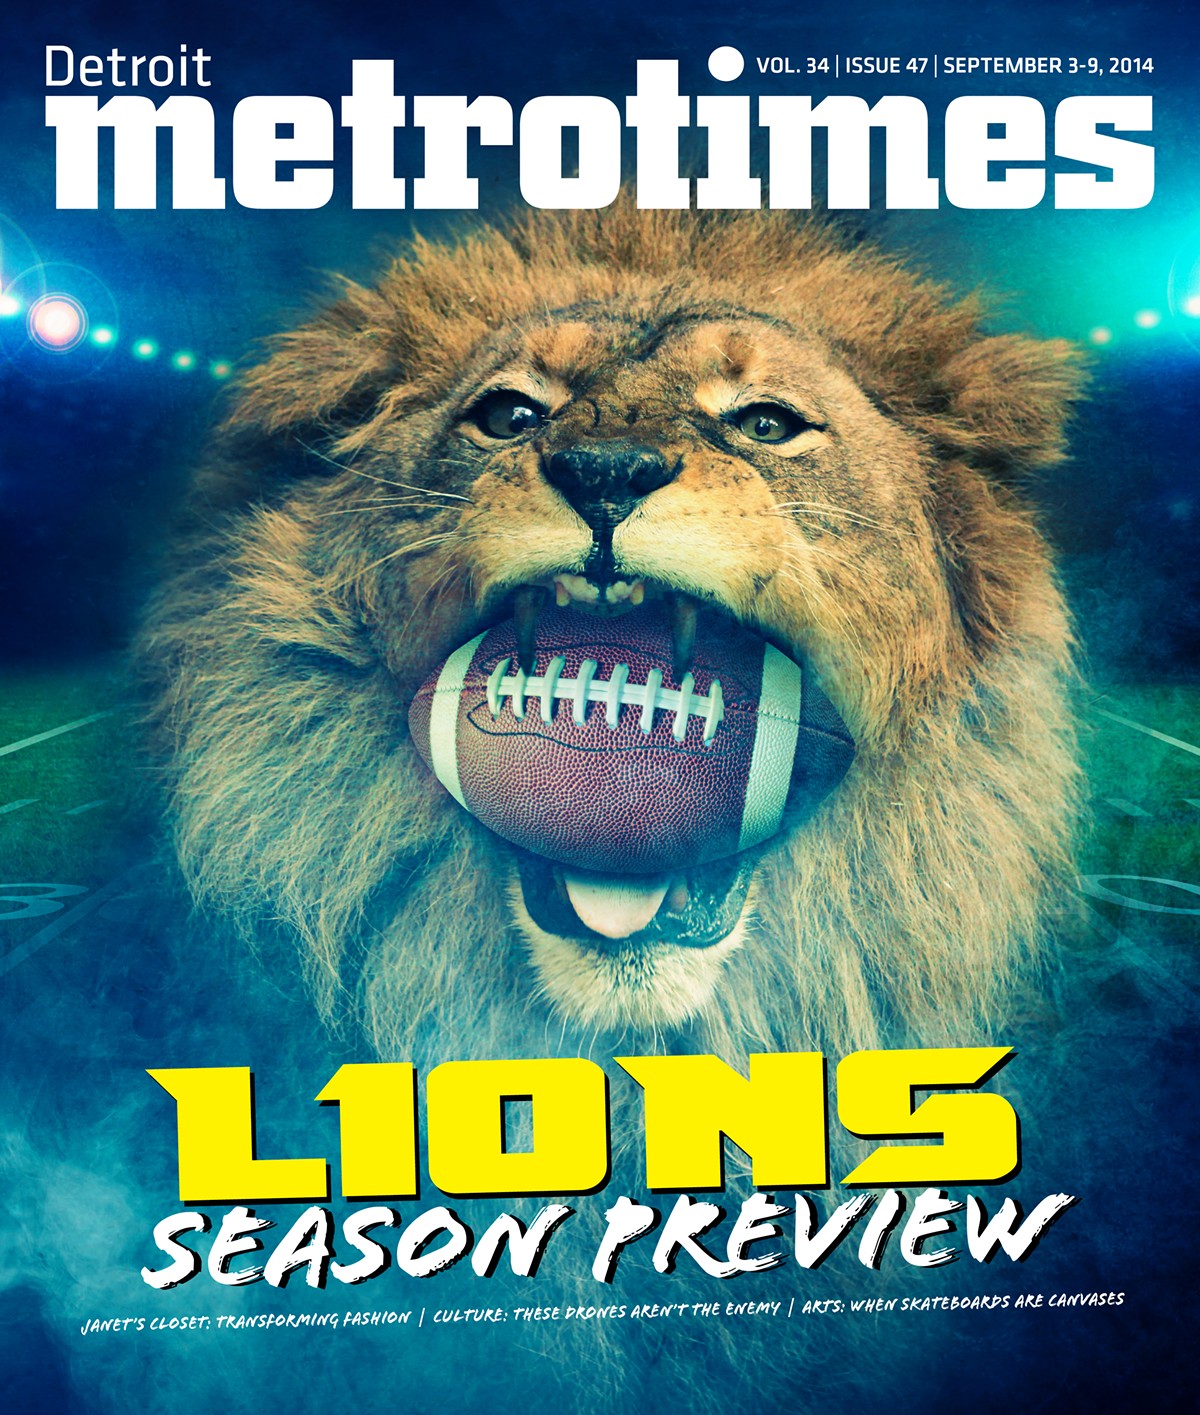 Detroit Lions Season Preview